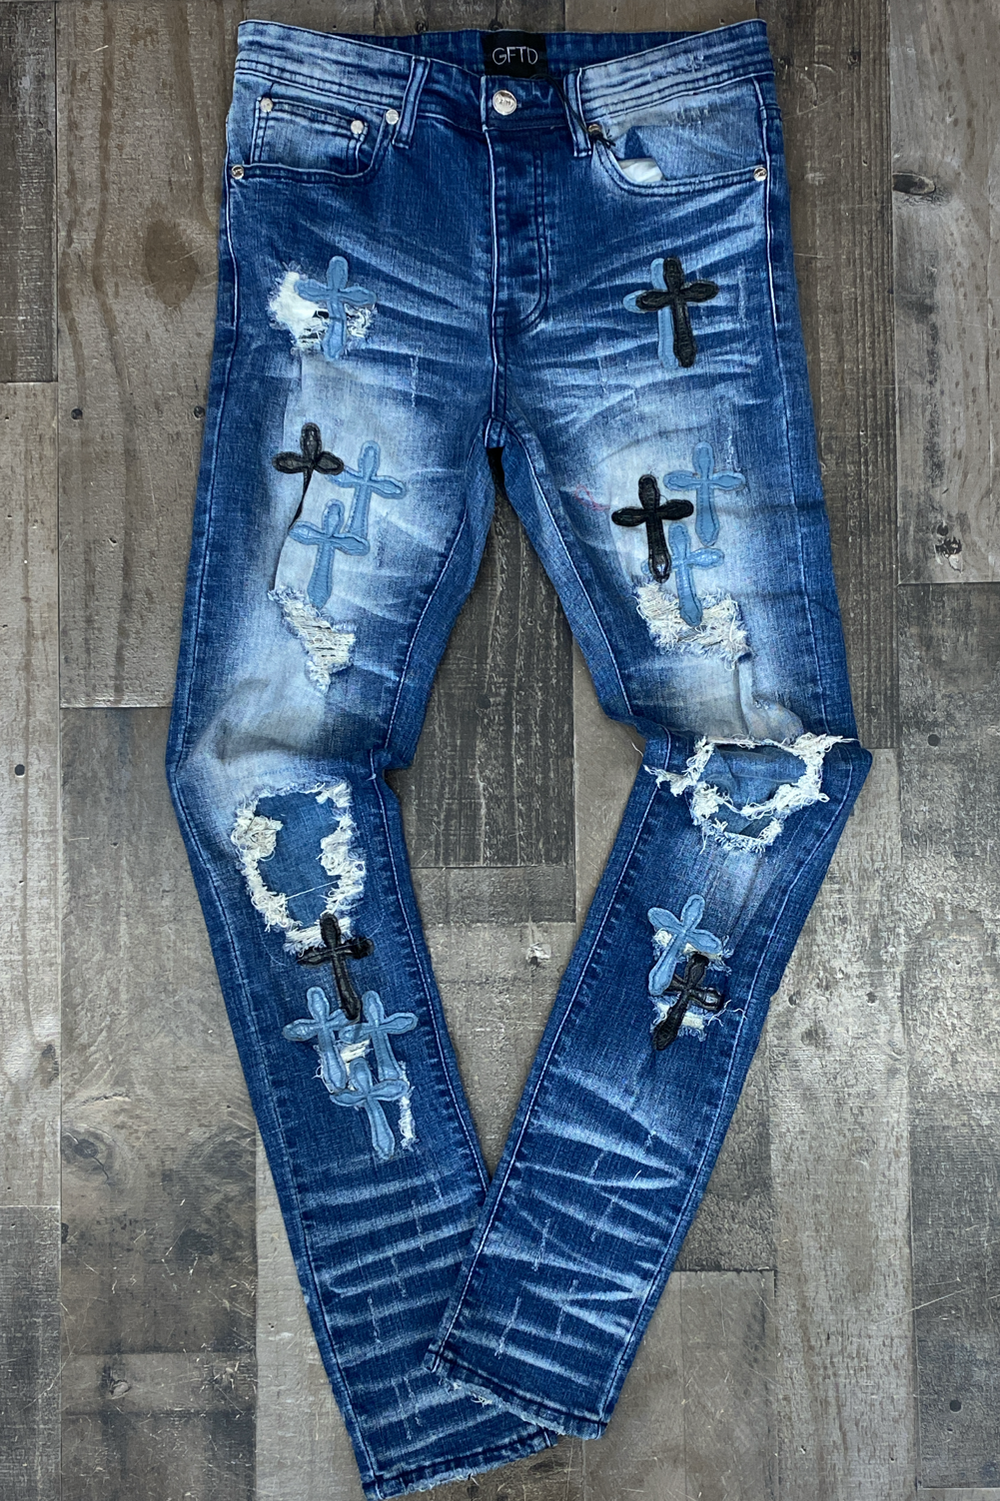 GFTD- stray 2.0 jeans (blue)